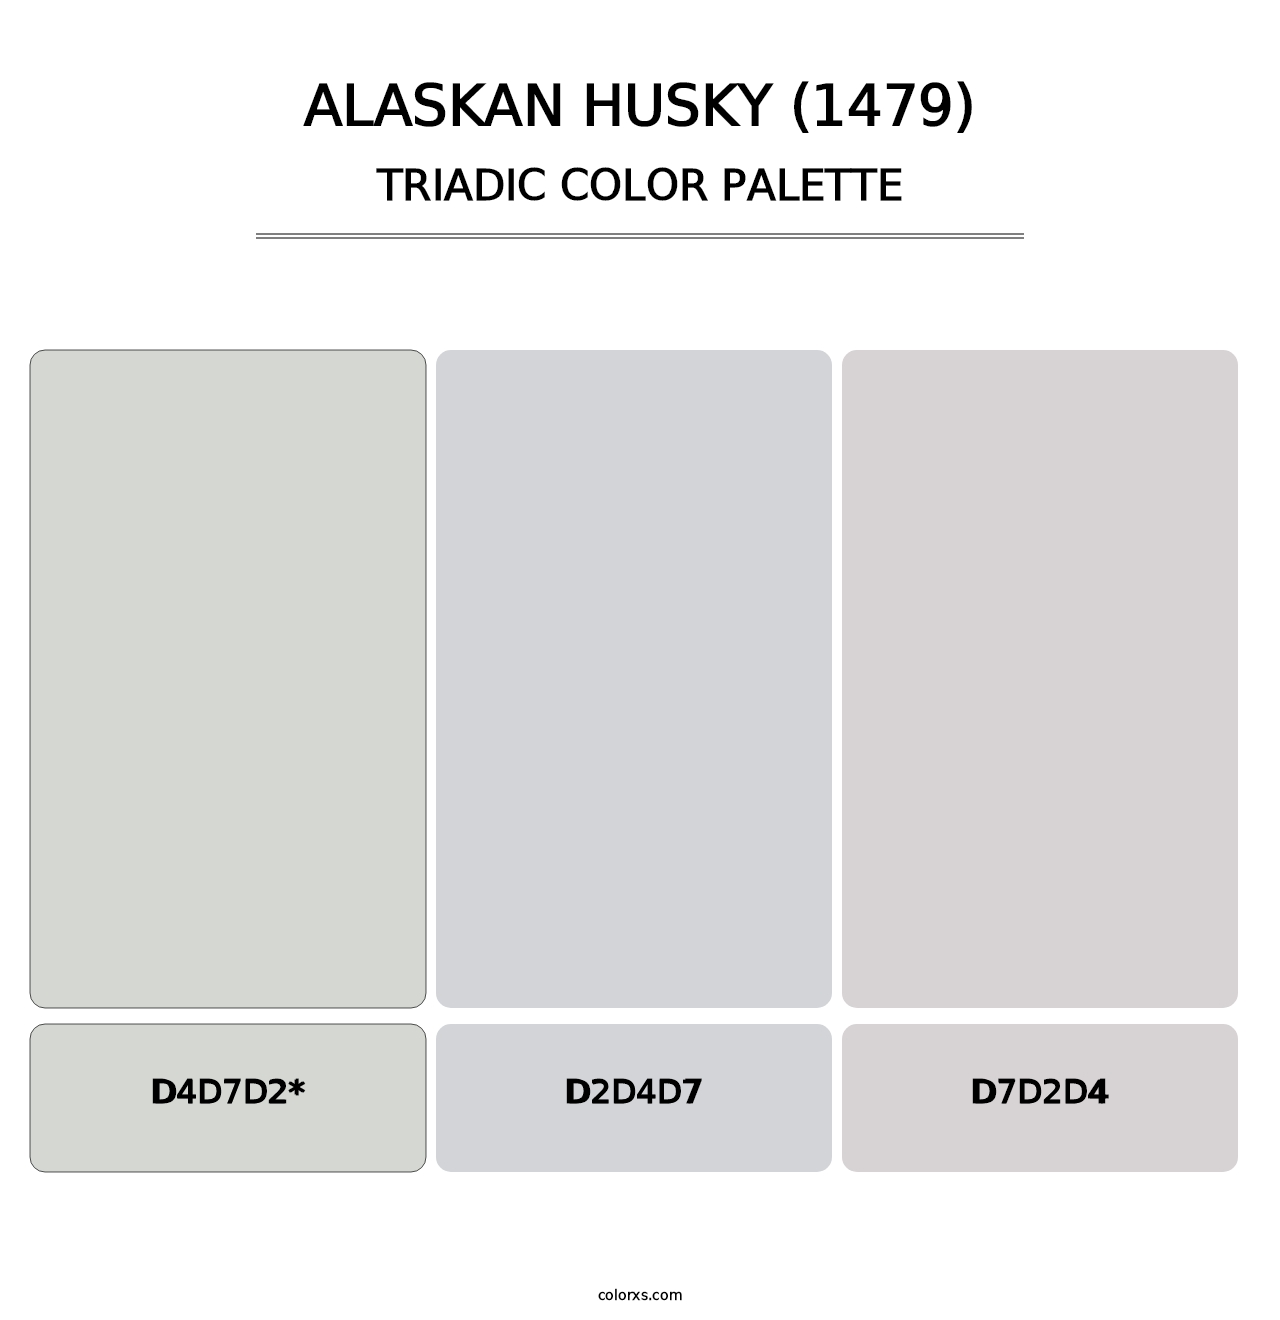 Alaskan Husky (1479) - Triadic Color Palette